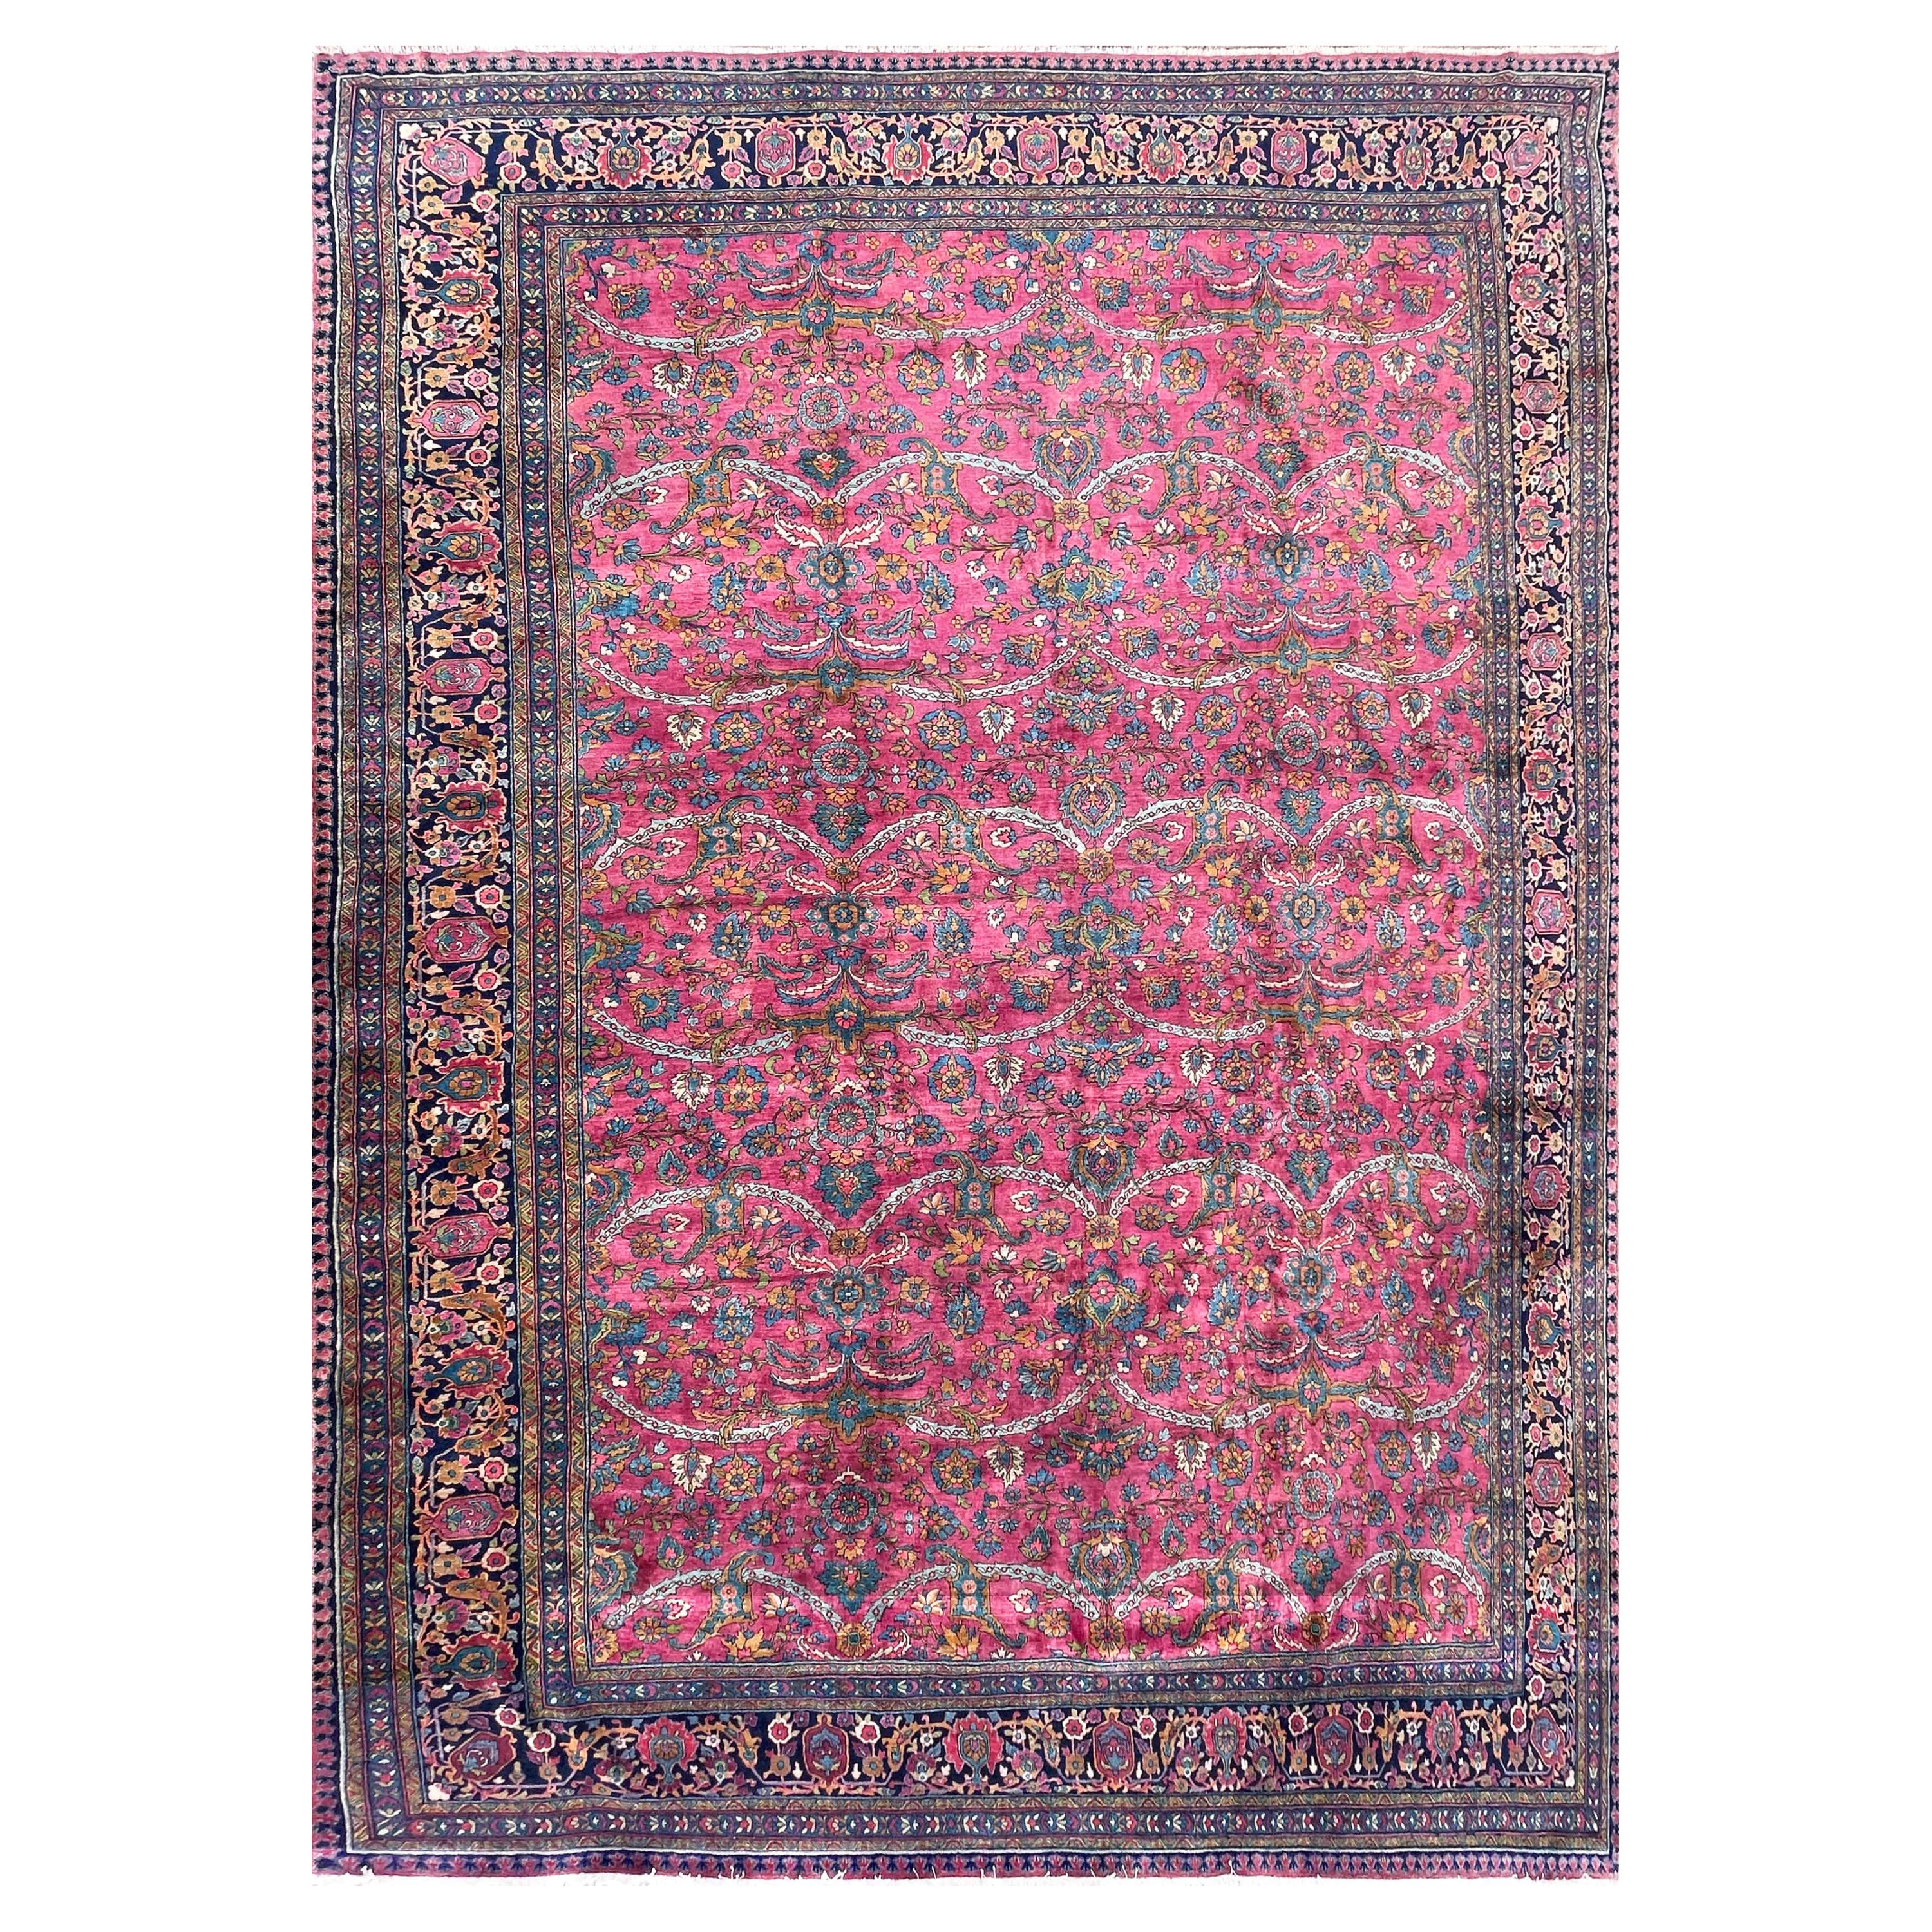 Antique Persian Mohajeran Sarouk carpet, Most Unusual For Sale